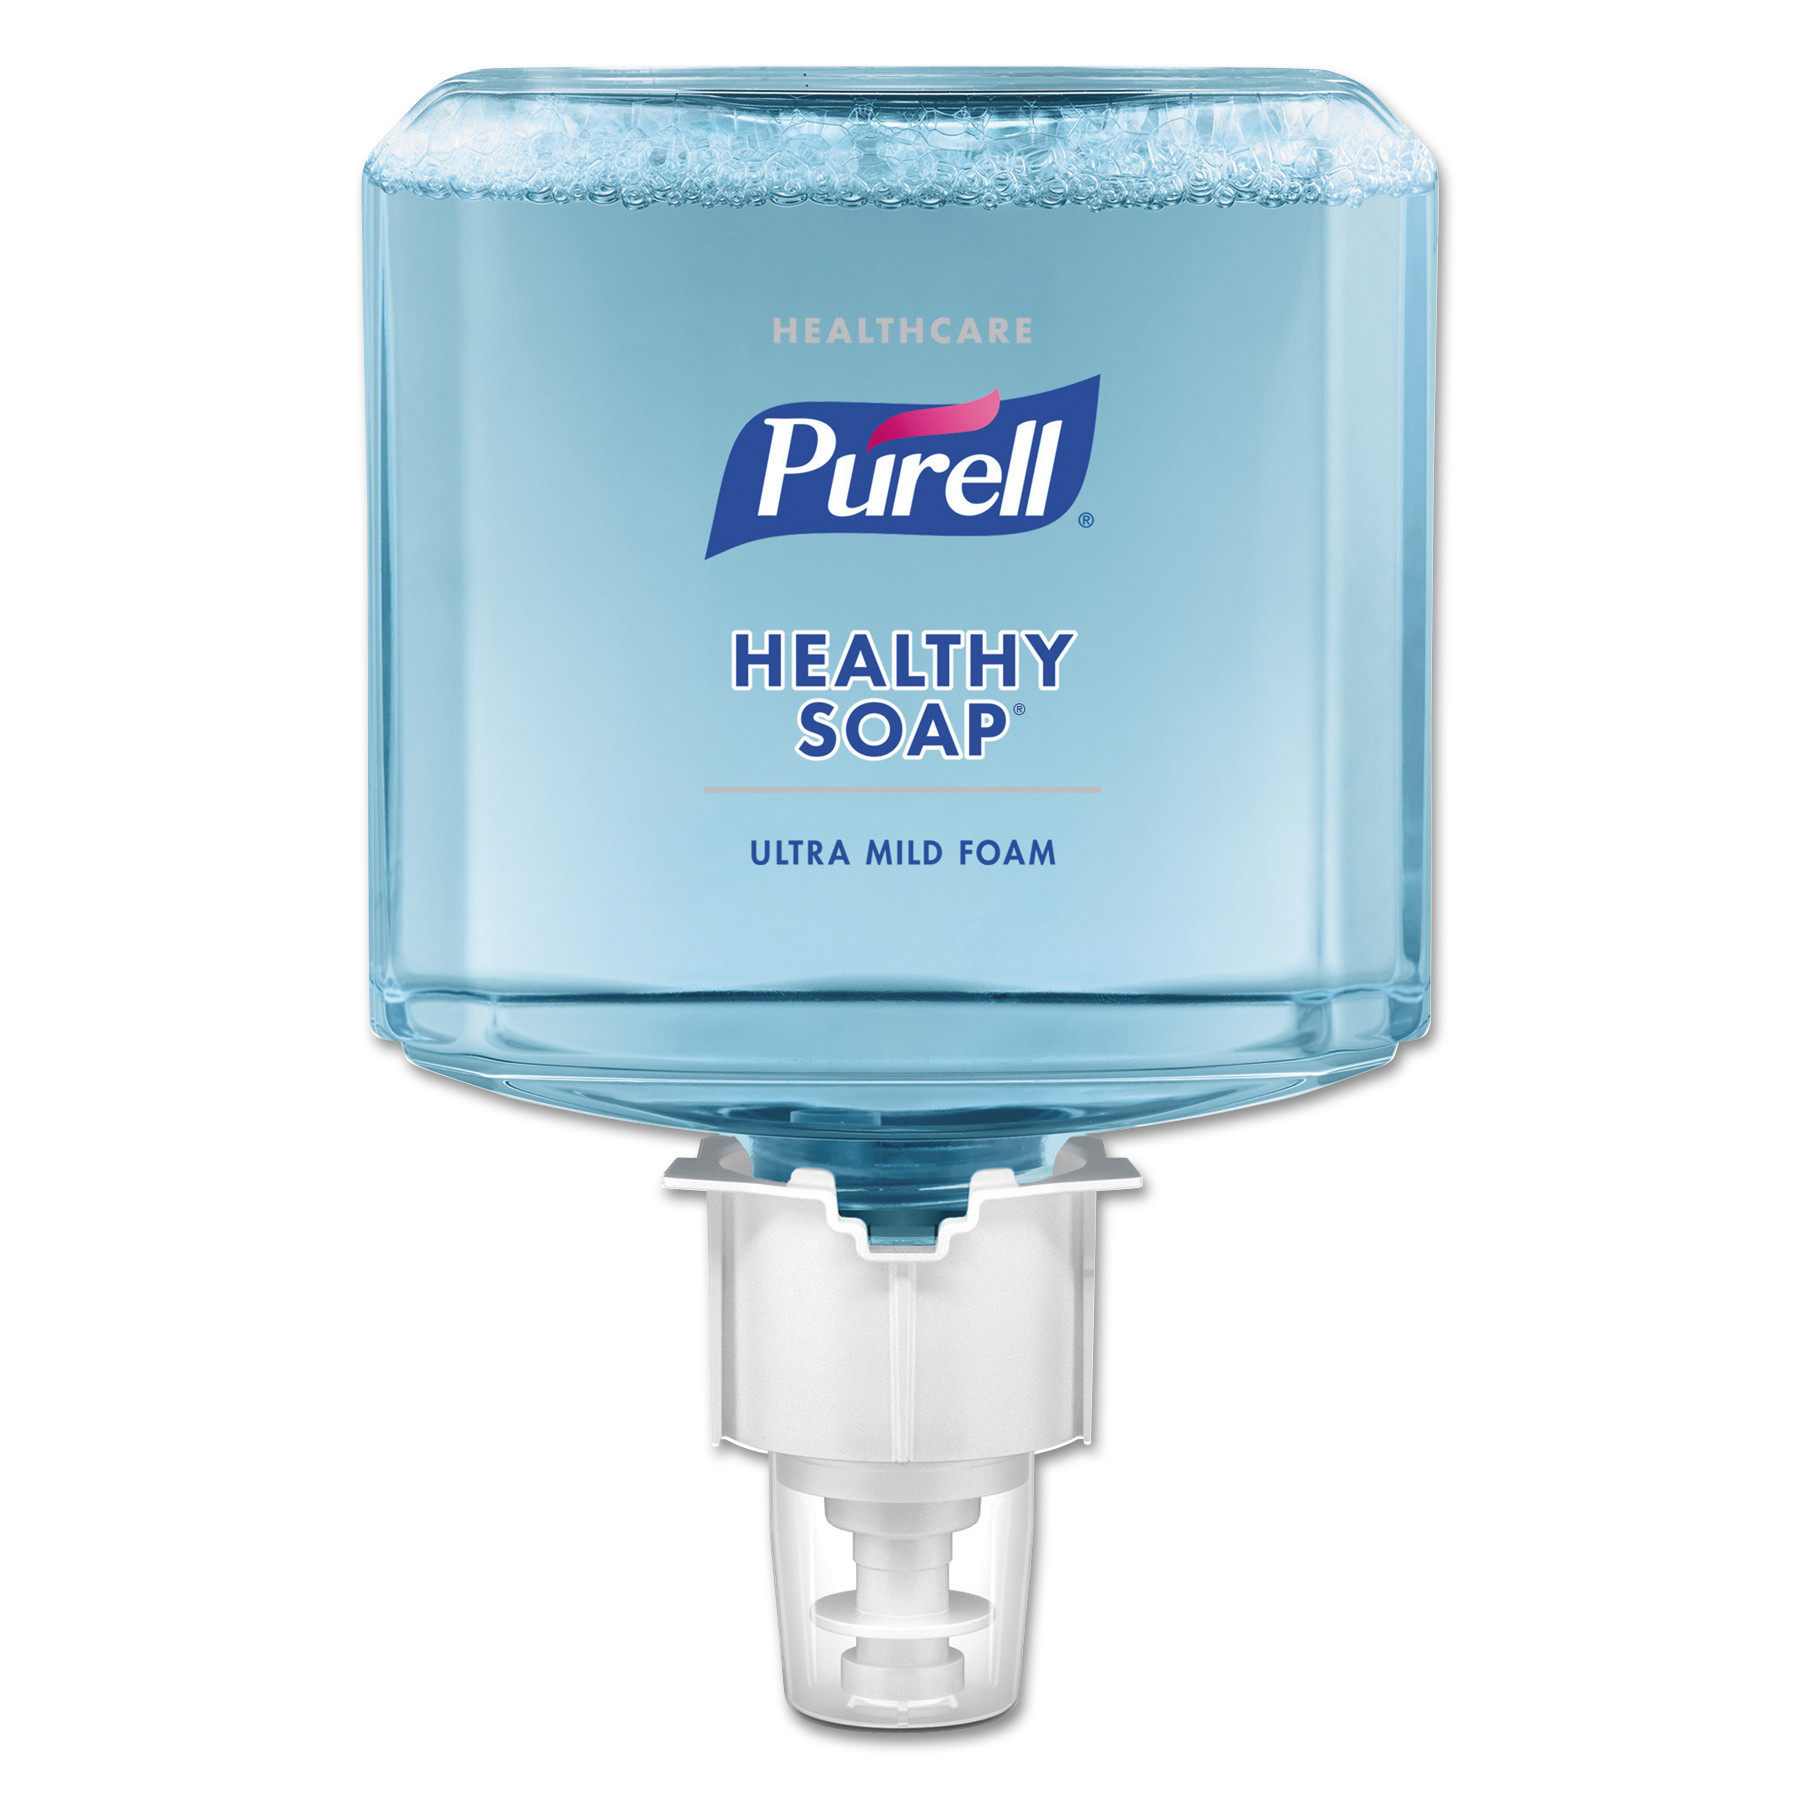 Healthcare HEALTHY SOAP Ultramild Foam, 1200 mL, For ES4 Dispensers, 2/CT